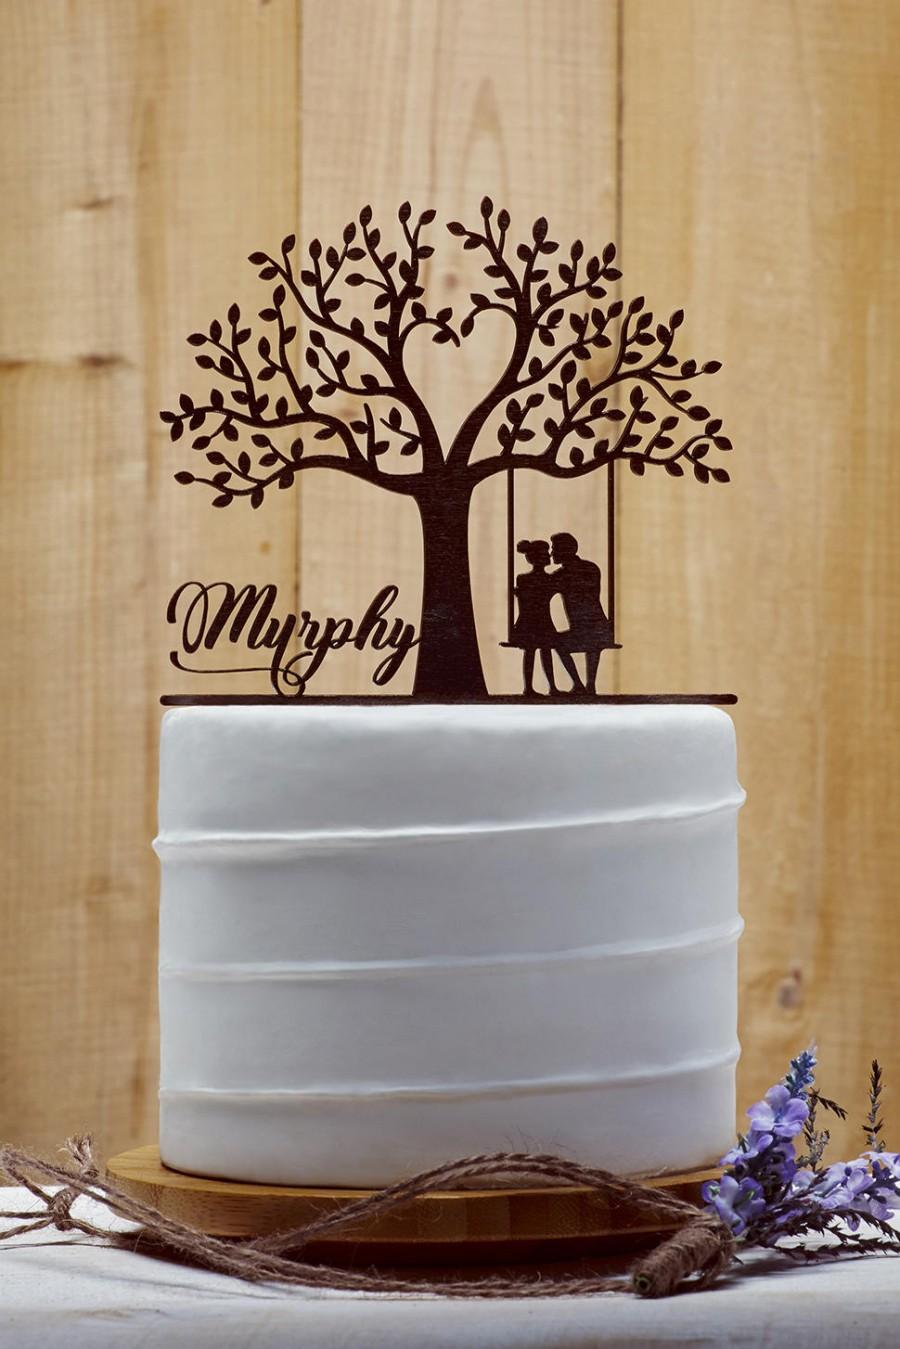 زفاف - Customized Wedding Cake Topper, Personalized Cake Topper for Wedding, Custom Personalized Wedding Cake Topper, Last Name Cake Topper - 02